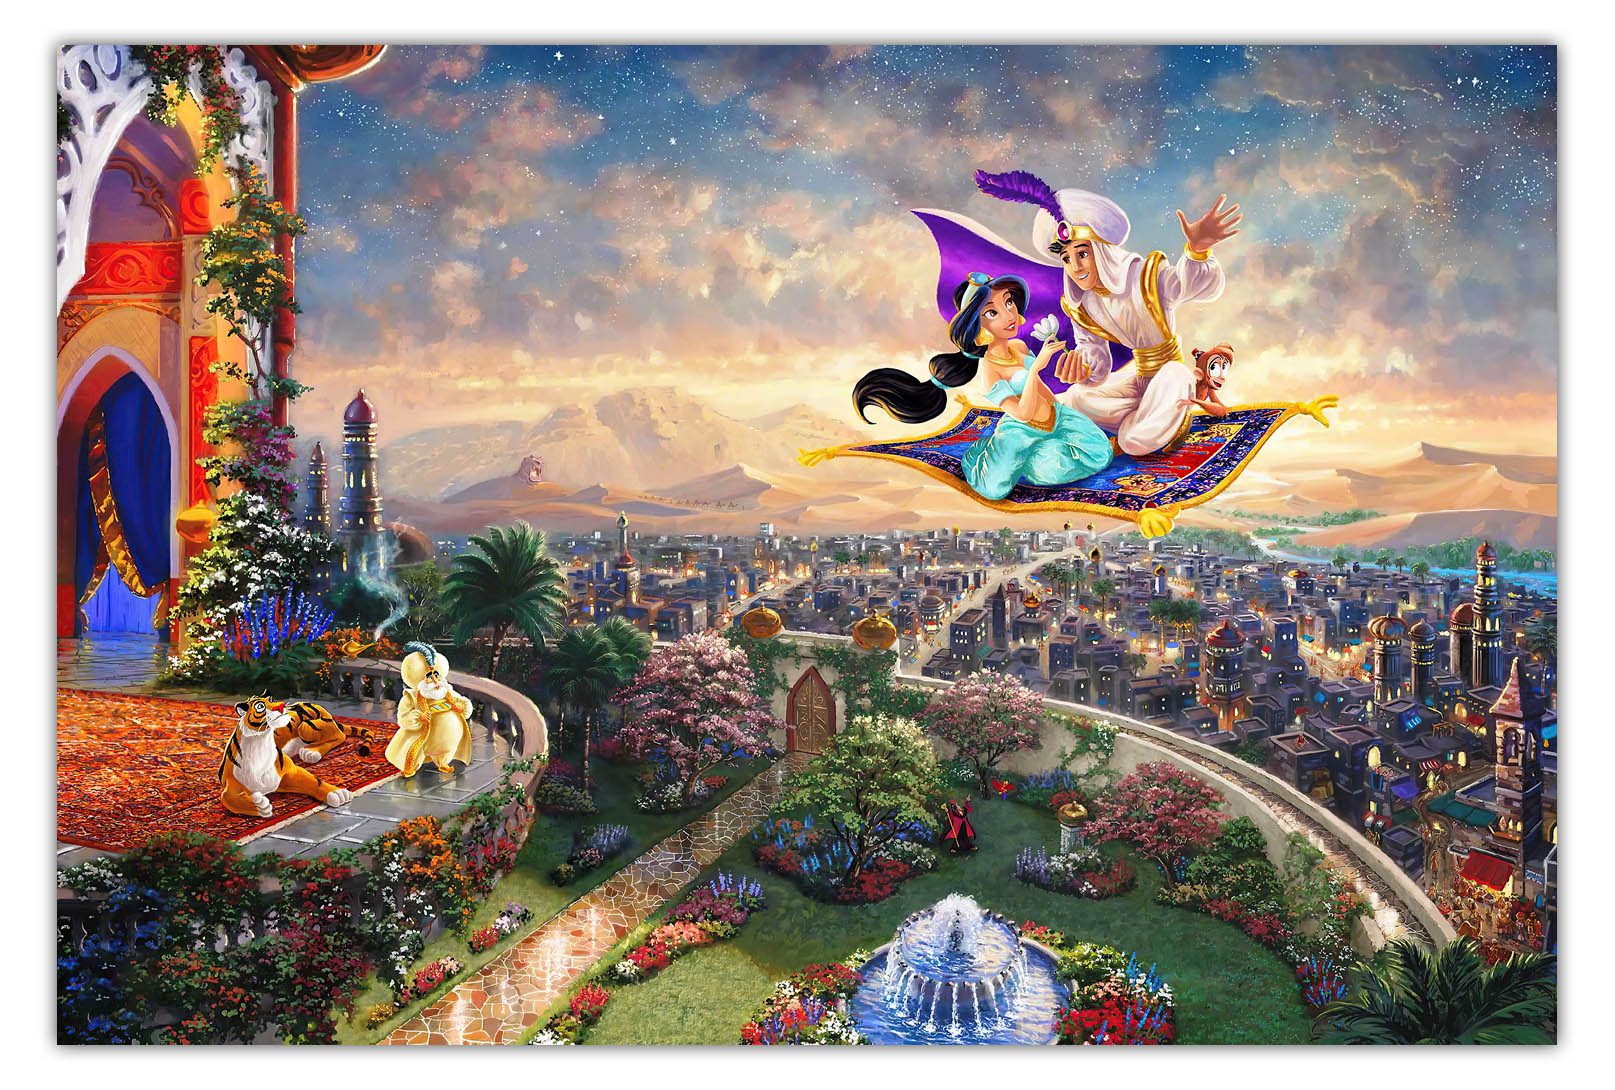 Aladdin by Thomas Kinkade